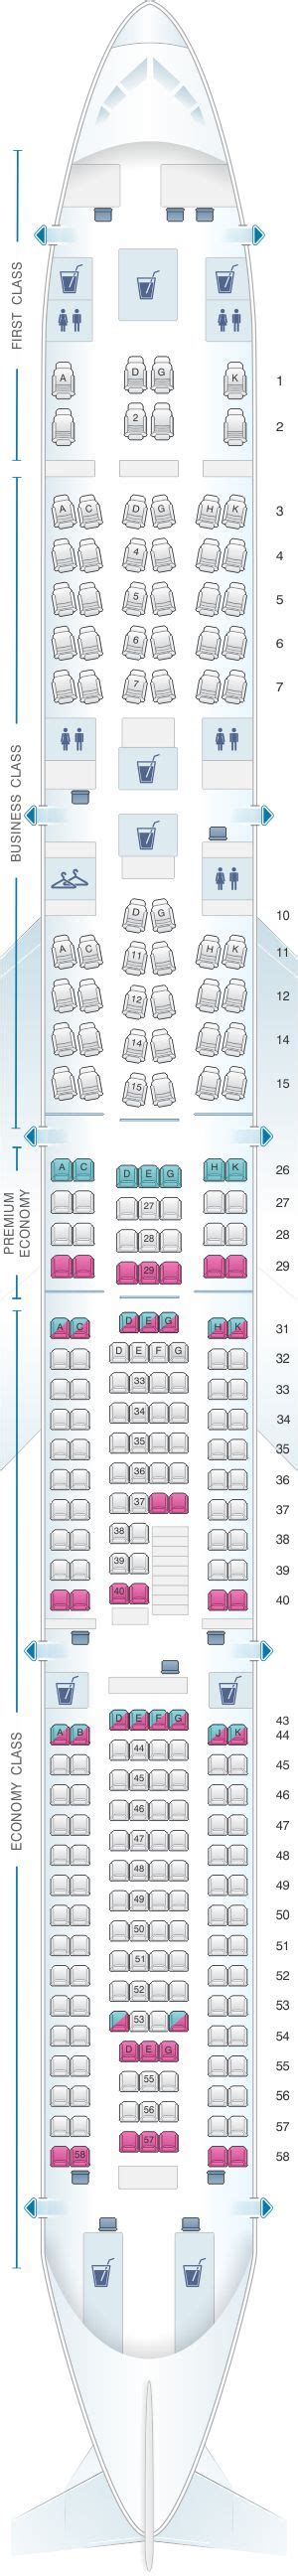 Seat Map Lufthansa Airbus A340 600 281pax Hainan Airlines Airbus